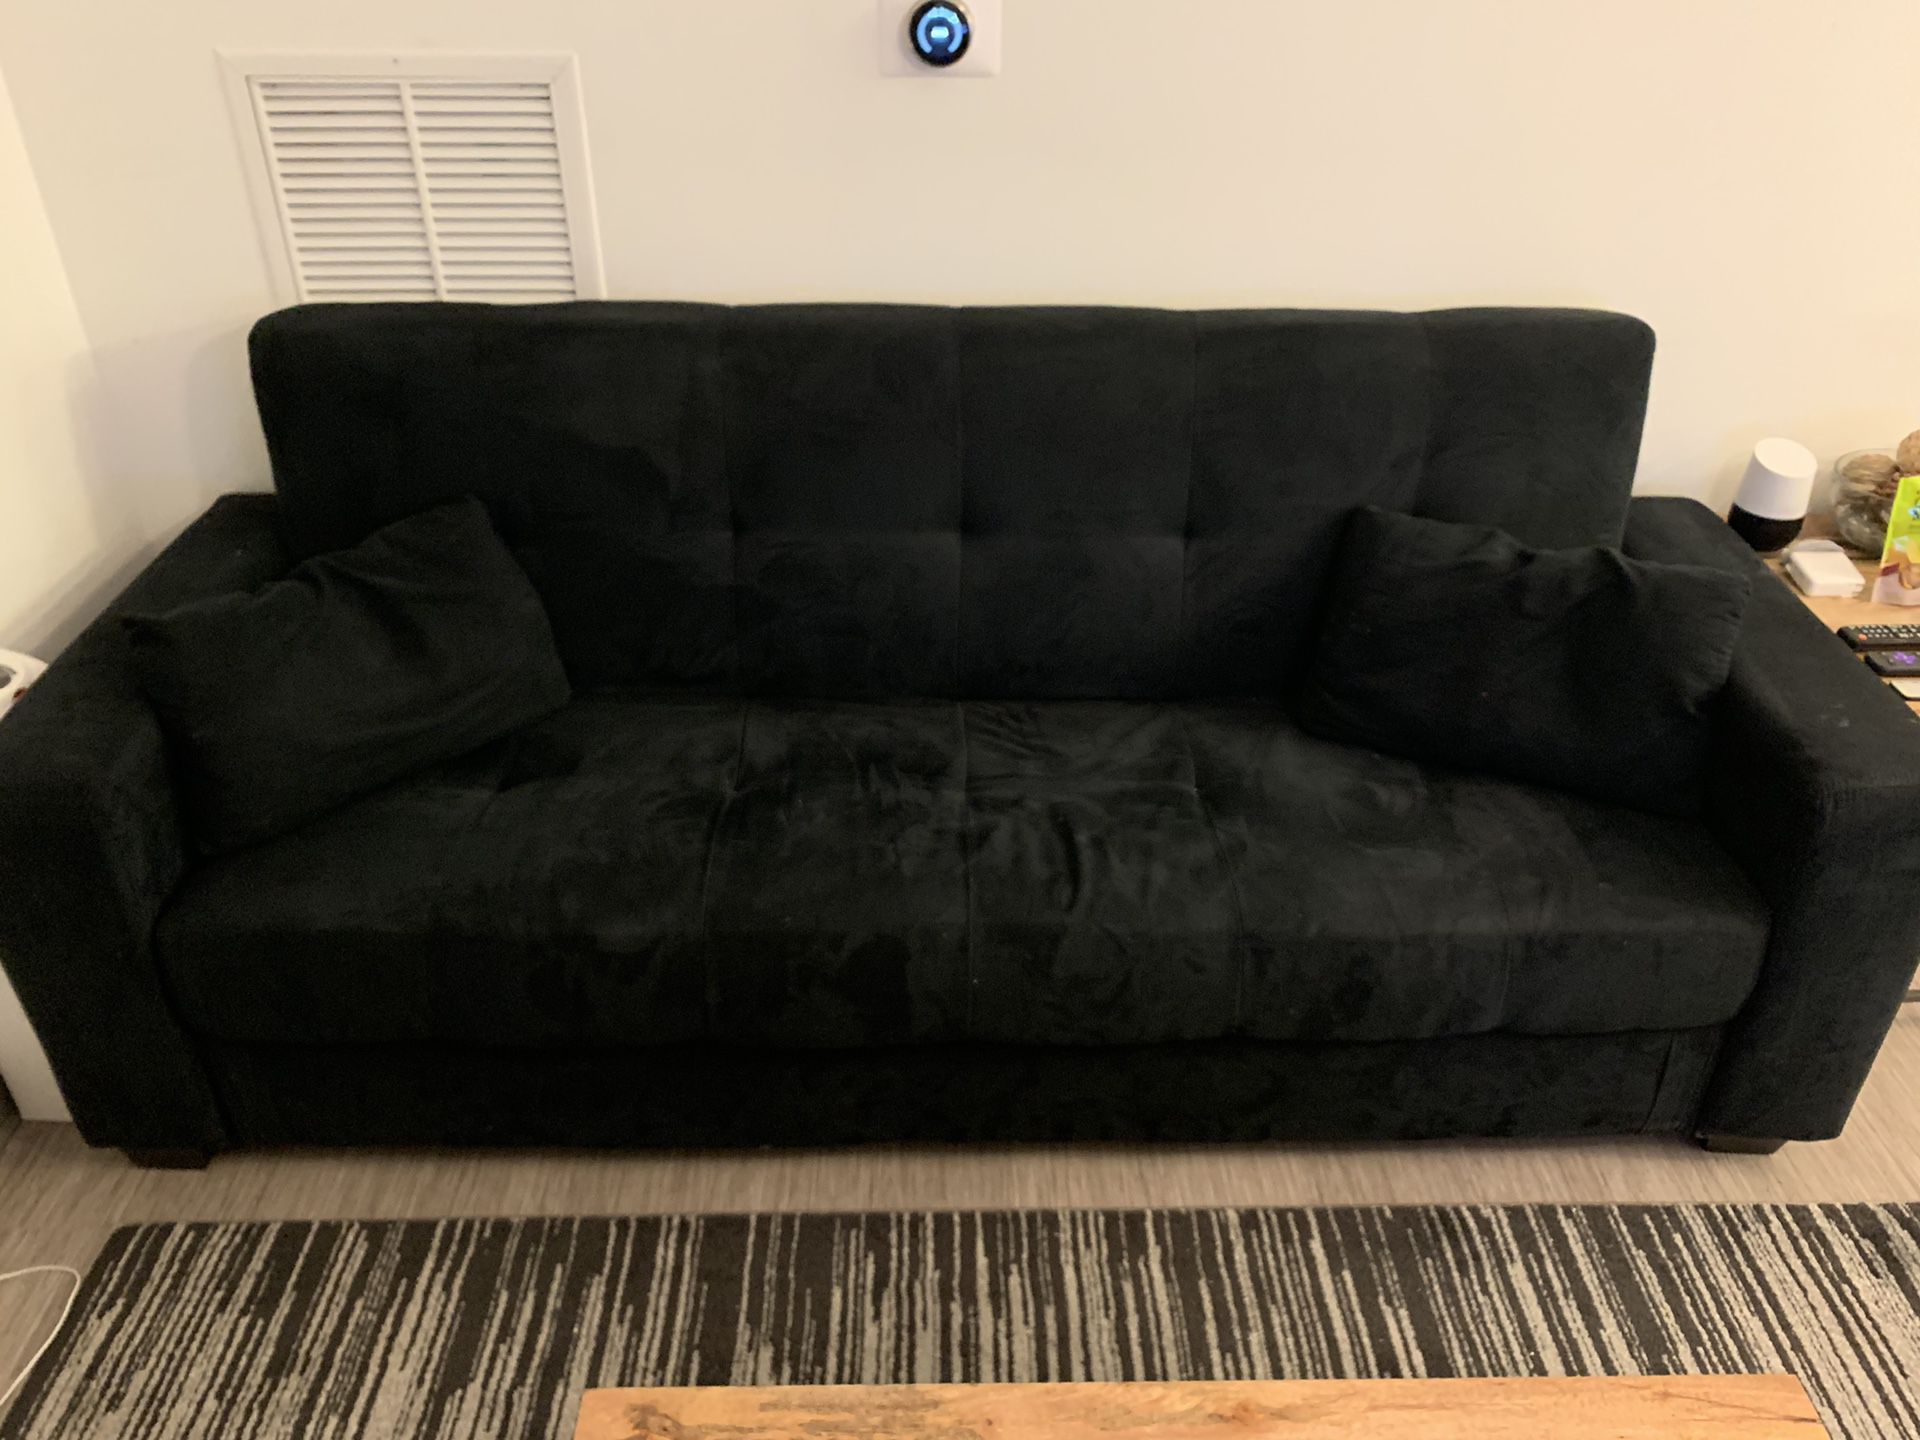 Target Sleeper Futon (Lifestyle Solutions Lexington Sofa Bed - Black)